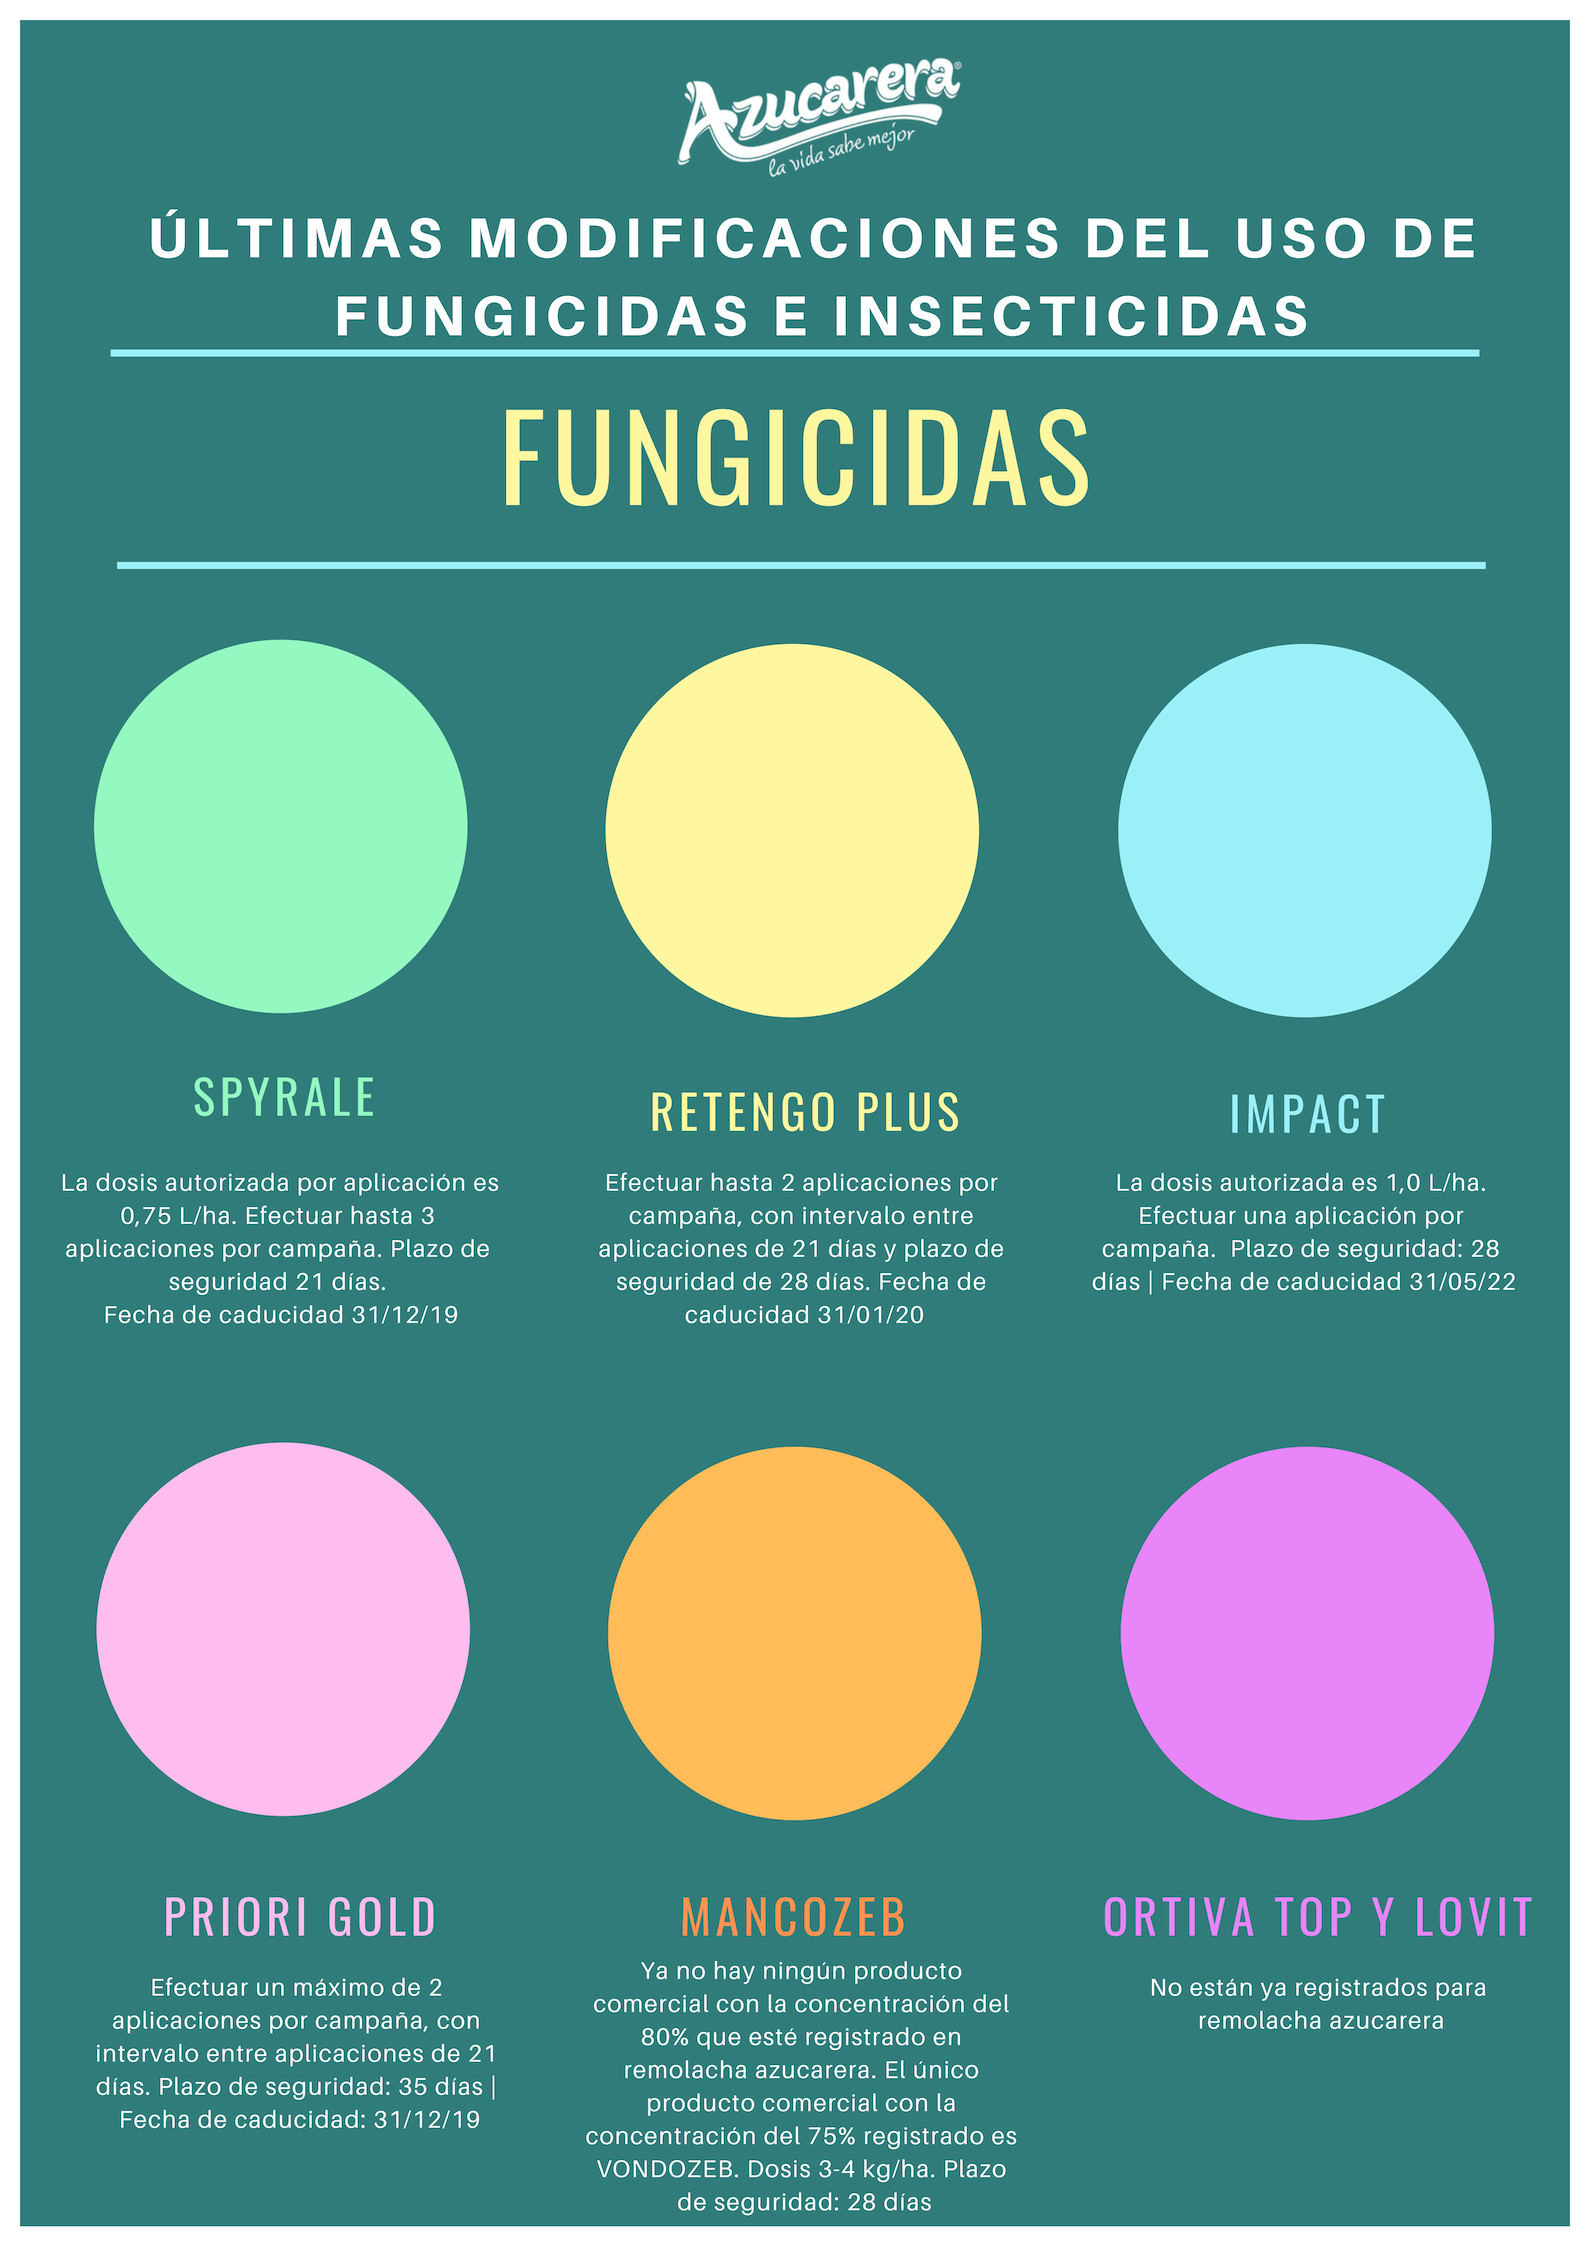 Fungicidas